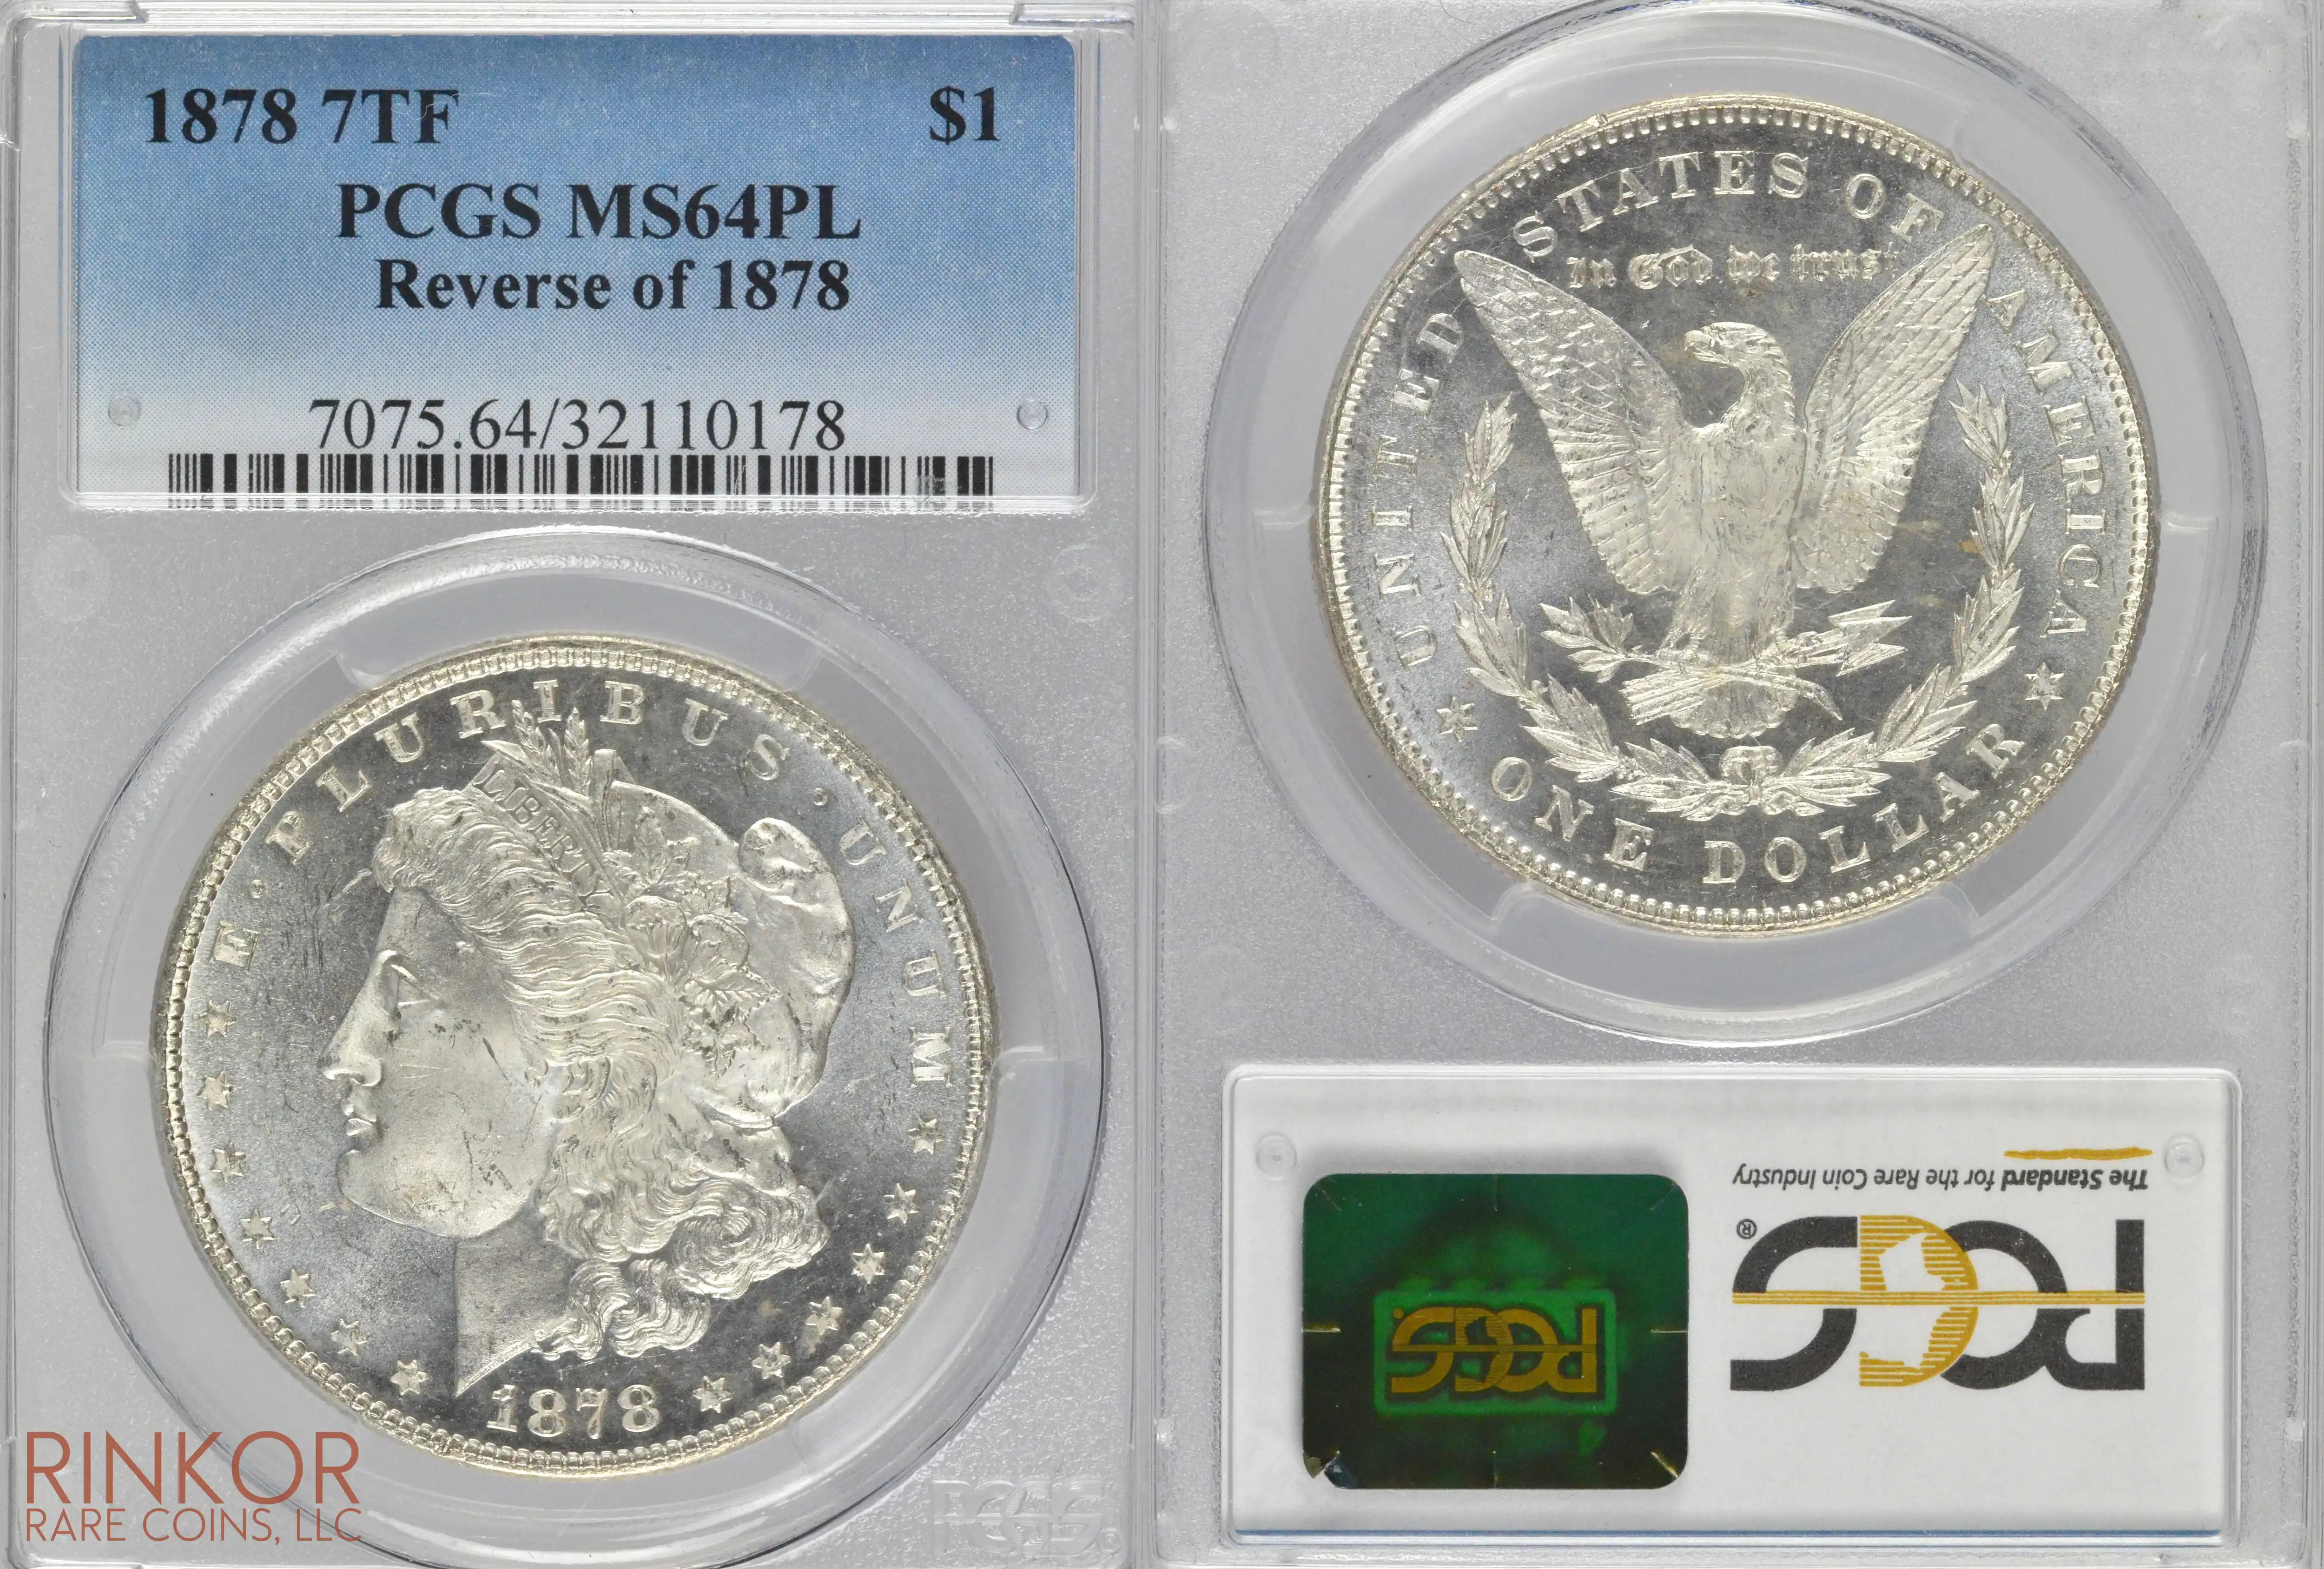 1878 7TF Reverse of 1878 $1 PCGS MS 64 PL